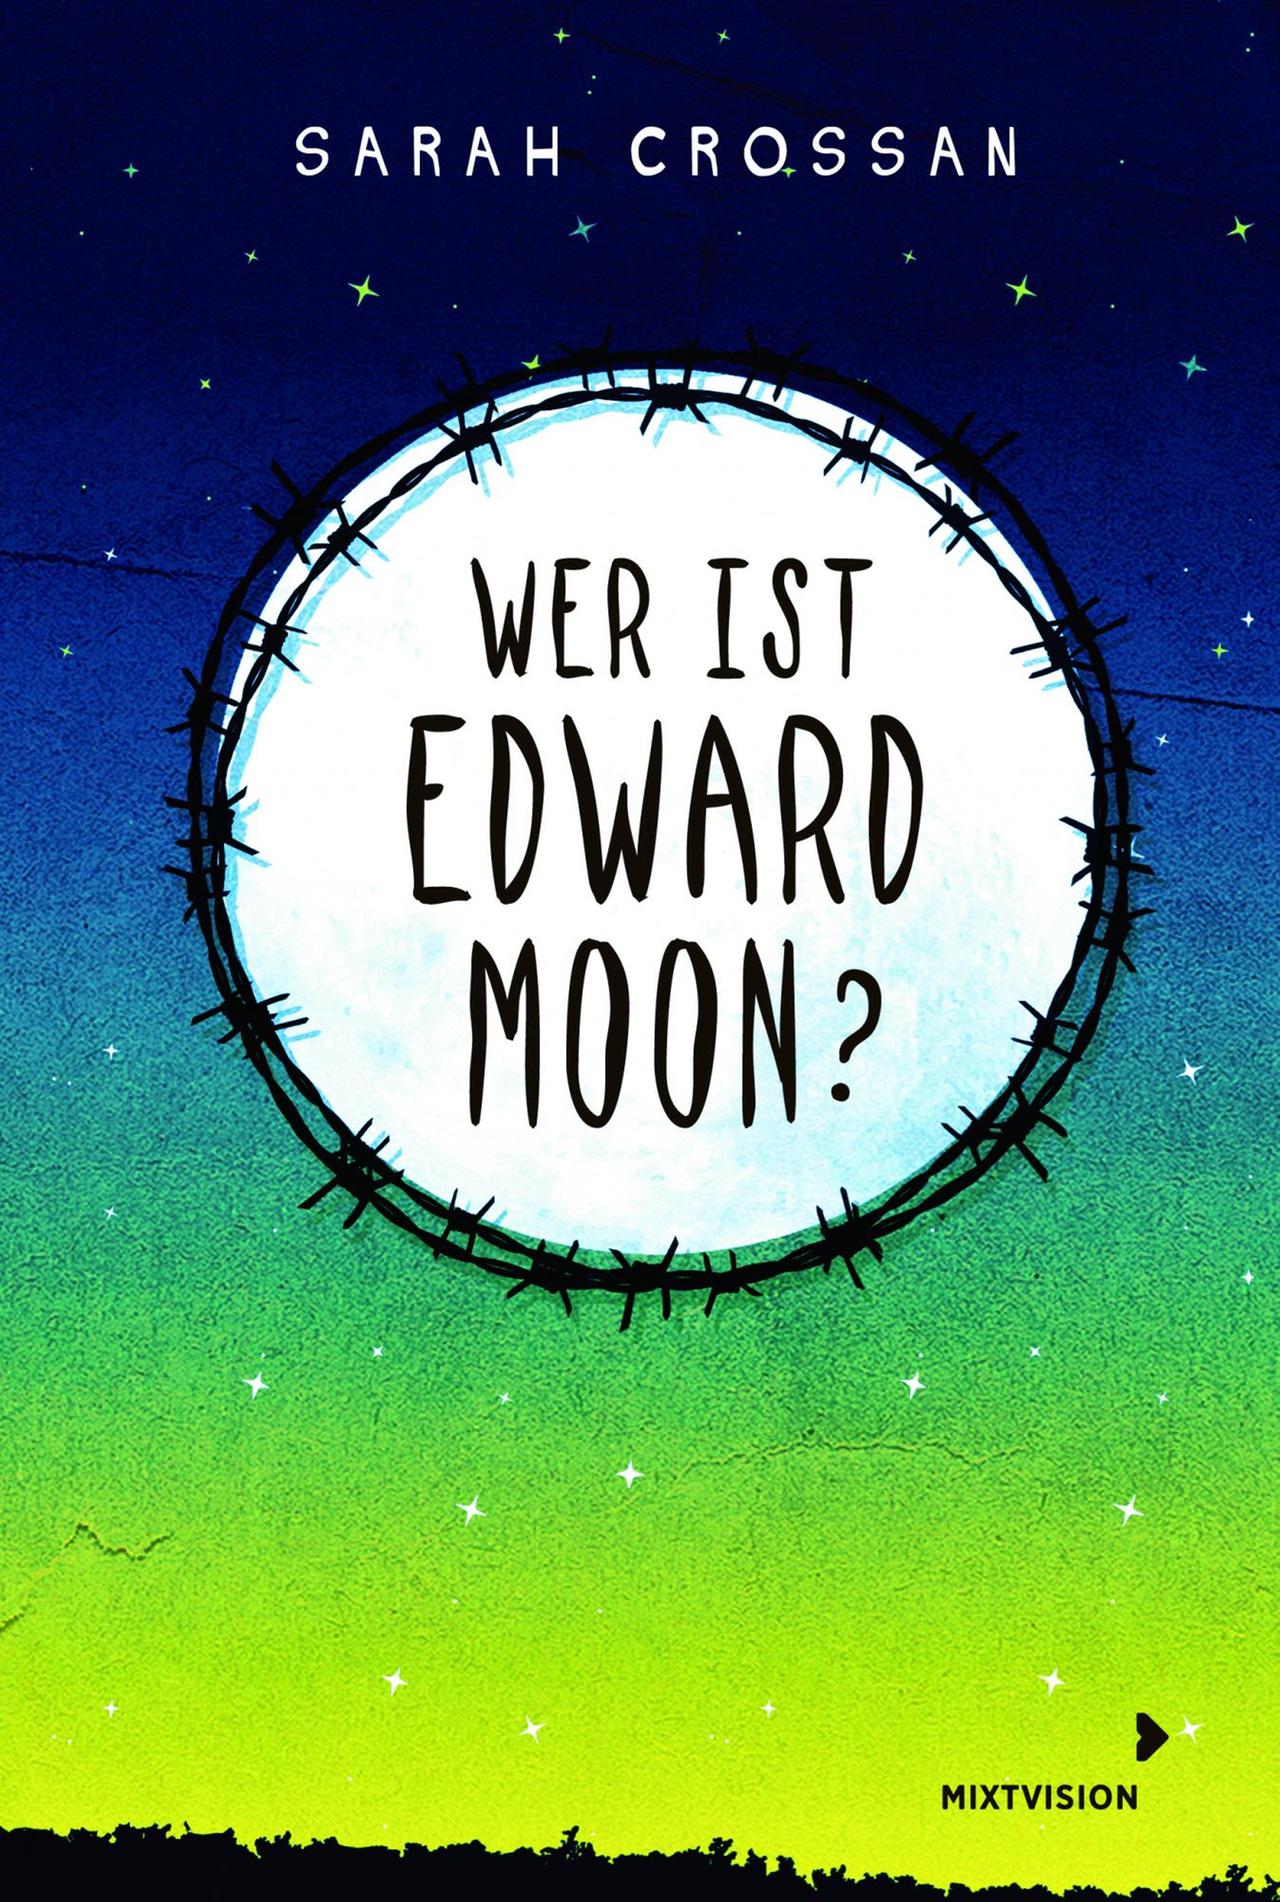 Buchcover: Sarah Crossan: „Wer ist Edward Moon?“